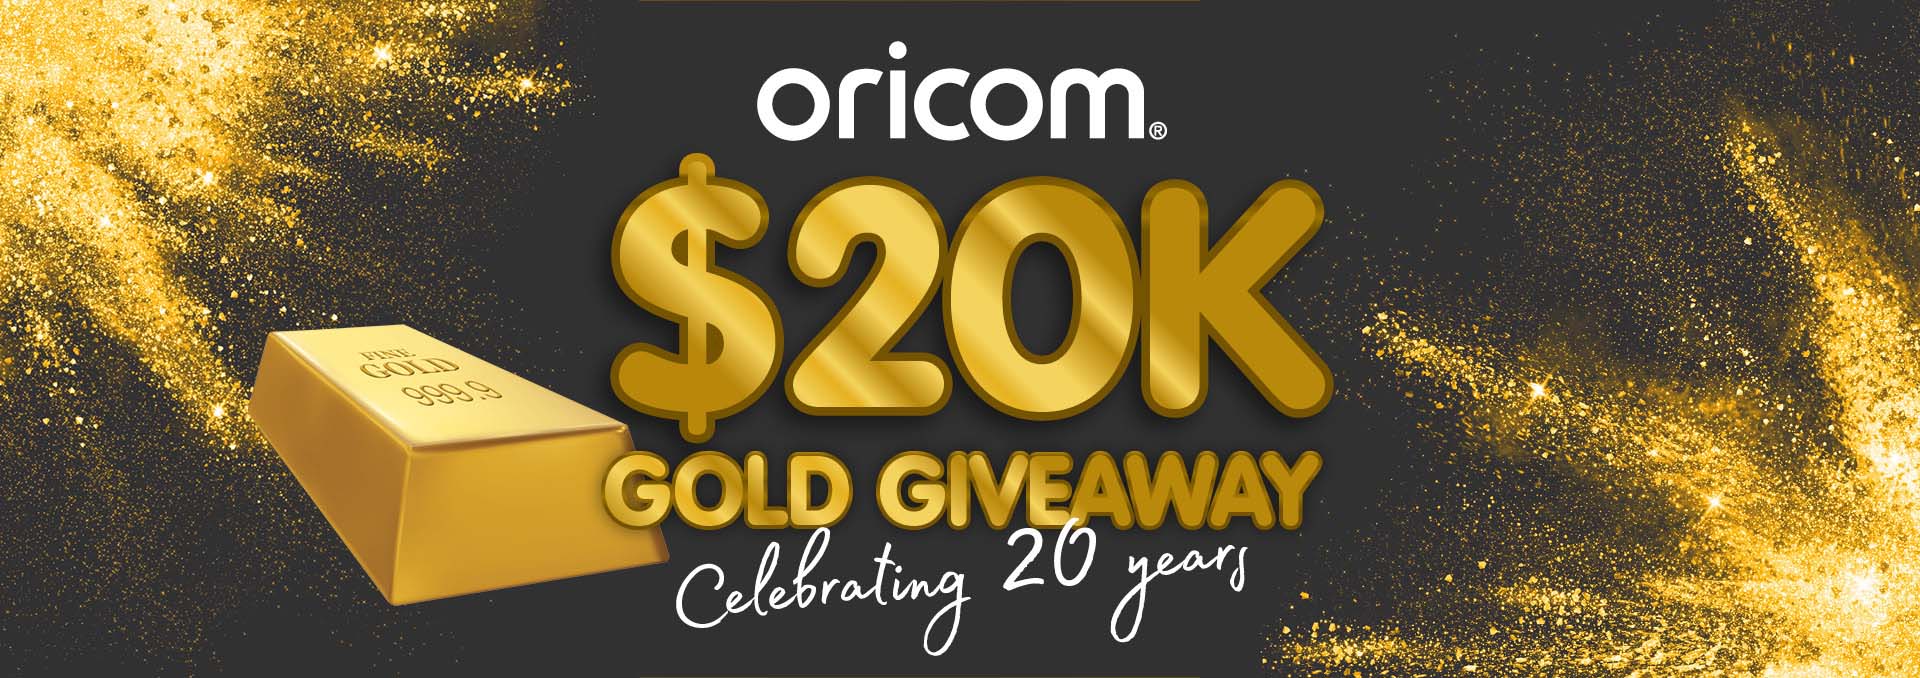 Oricom 20 Years WIN 20K Gold